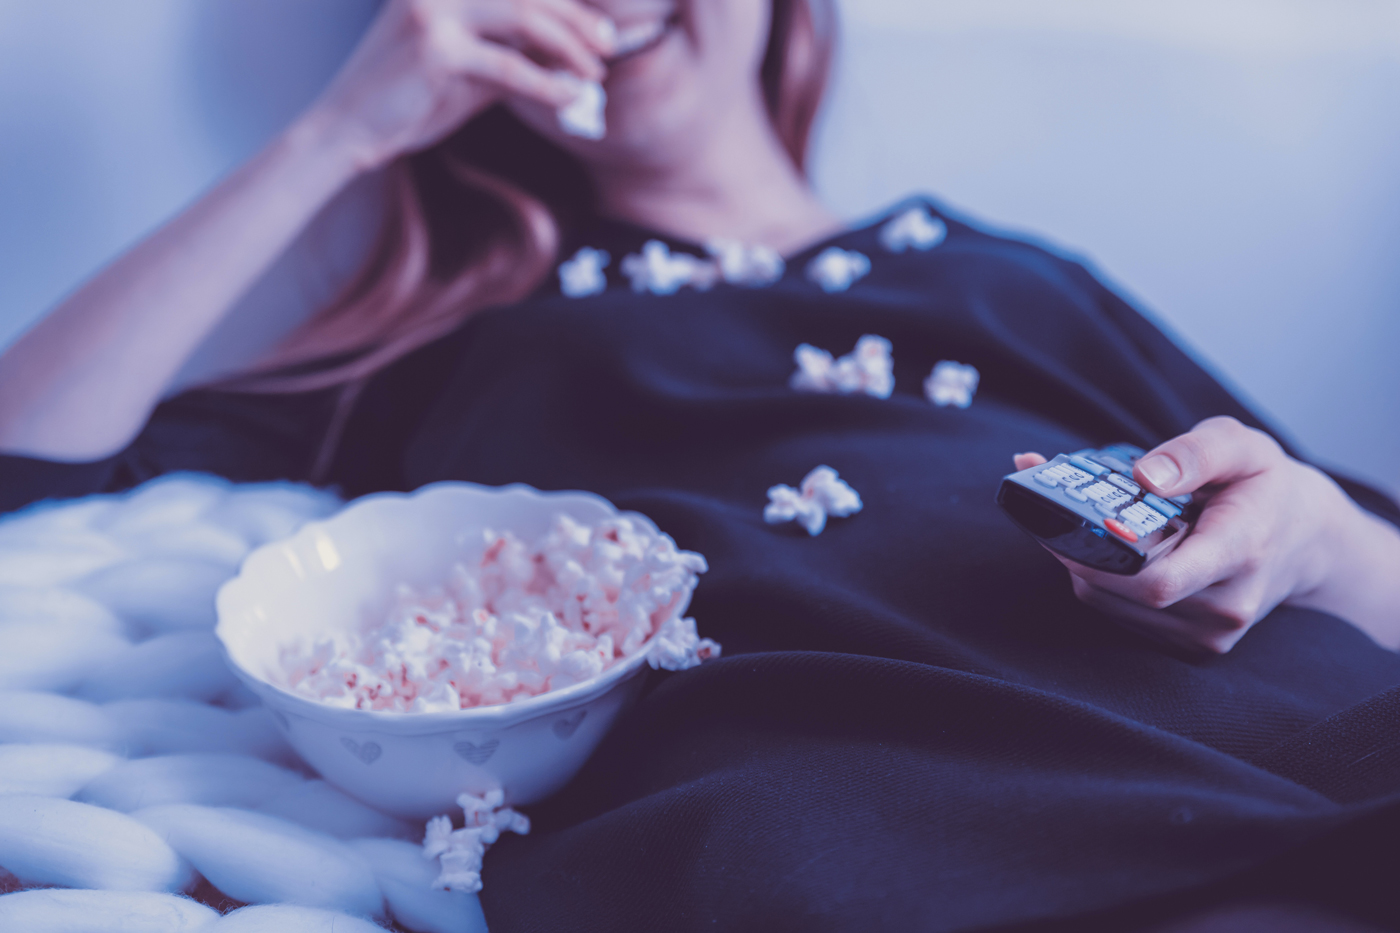 A women smiling s she eats popcorn while watching TV